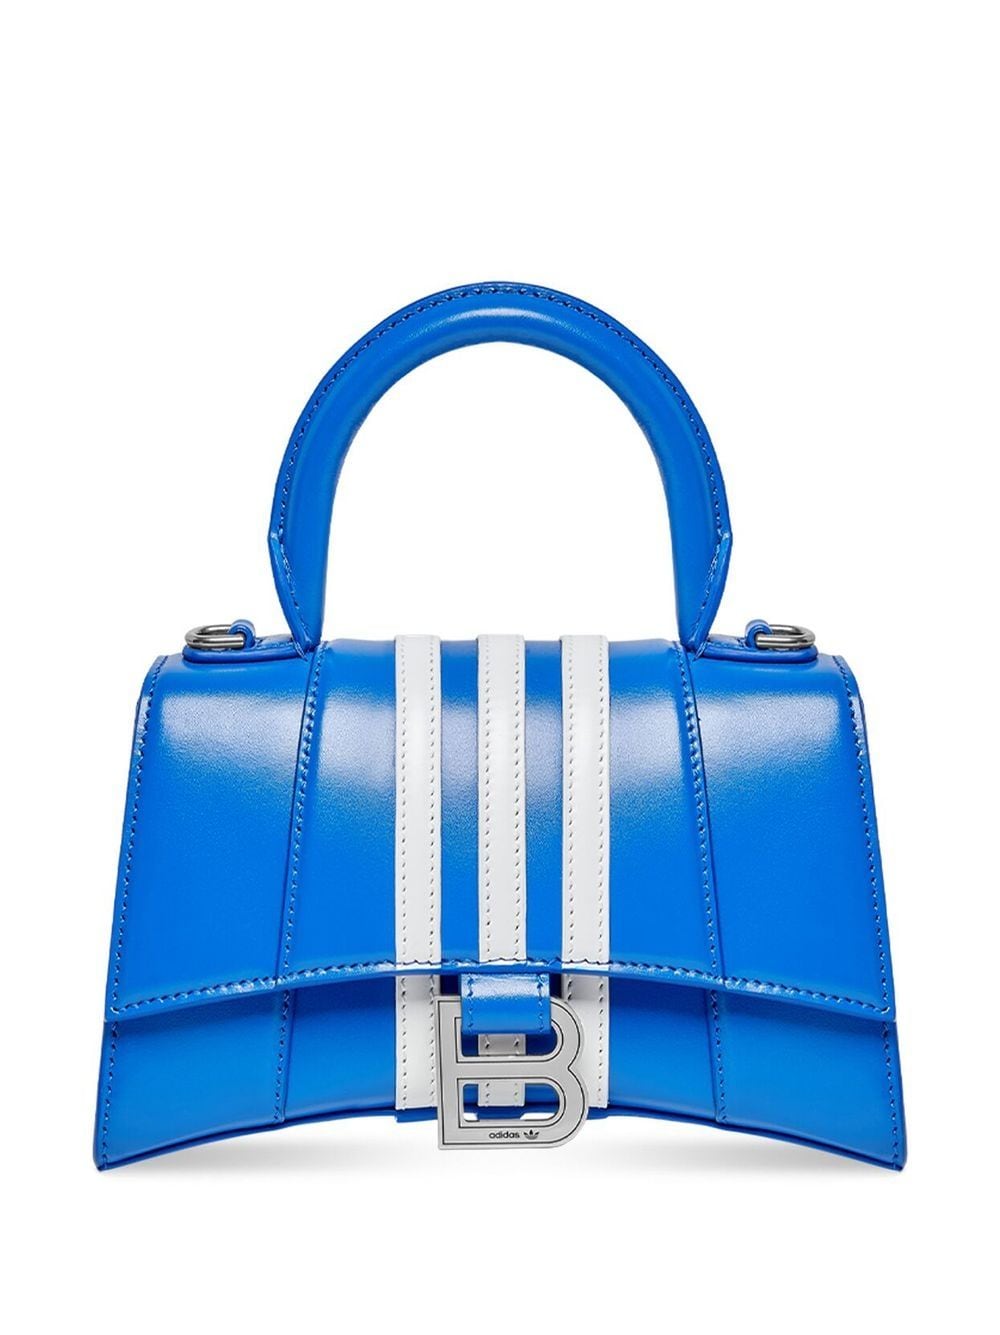 Balenciaga x adidas XS Hourglass mini bag - Blue